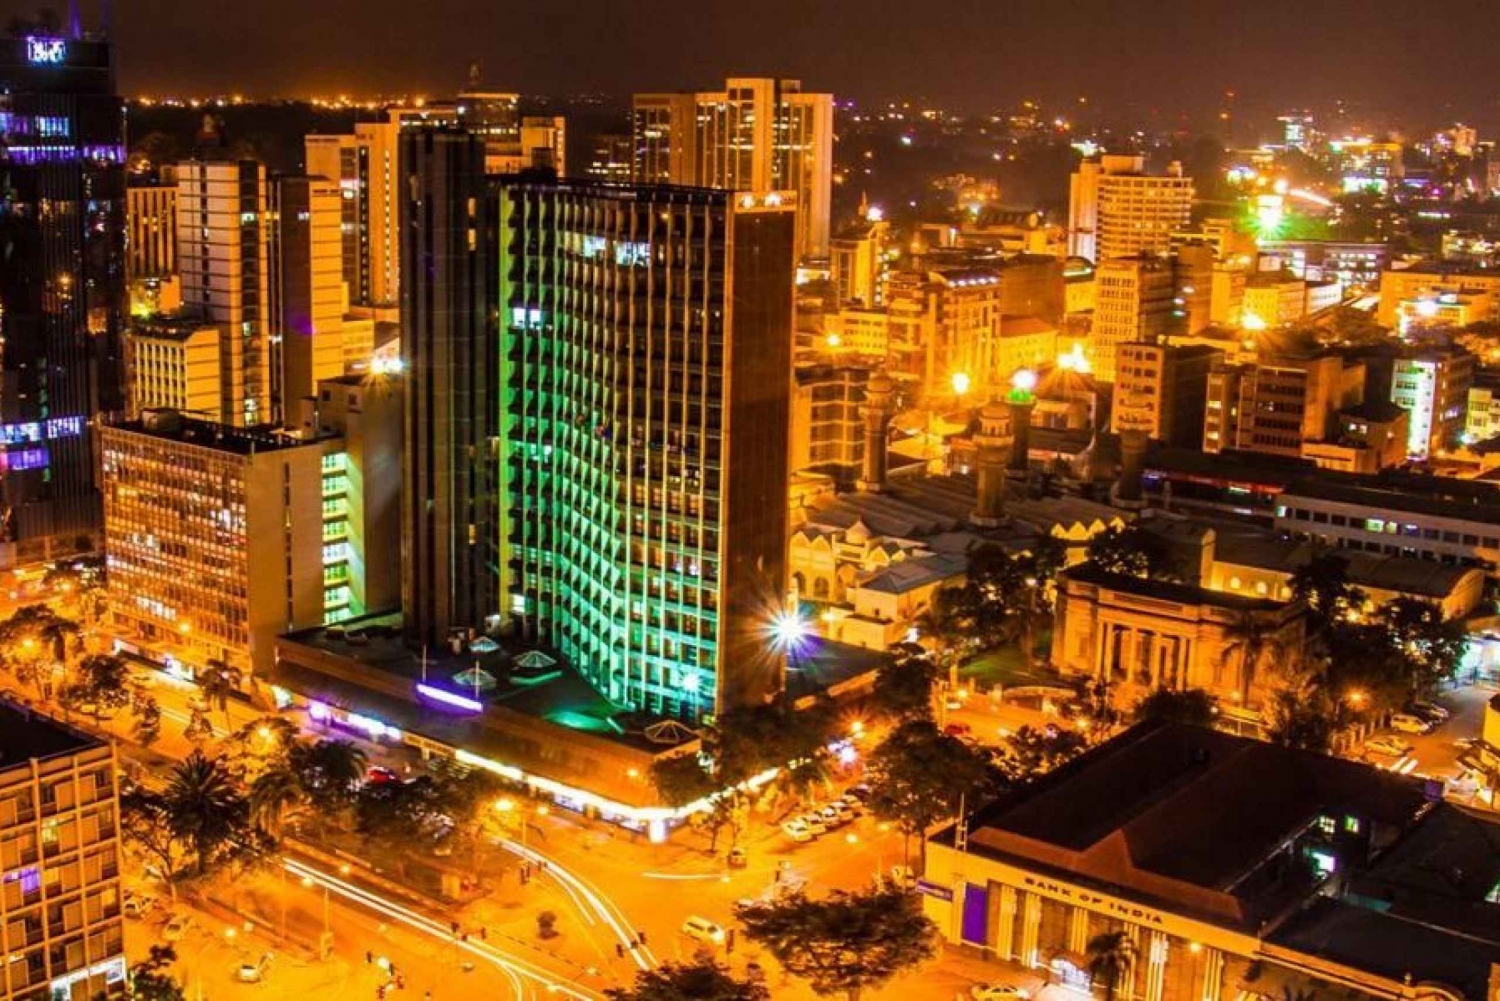 Visite de la ville de Nairobi